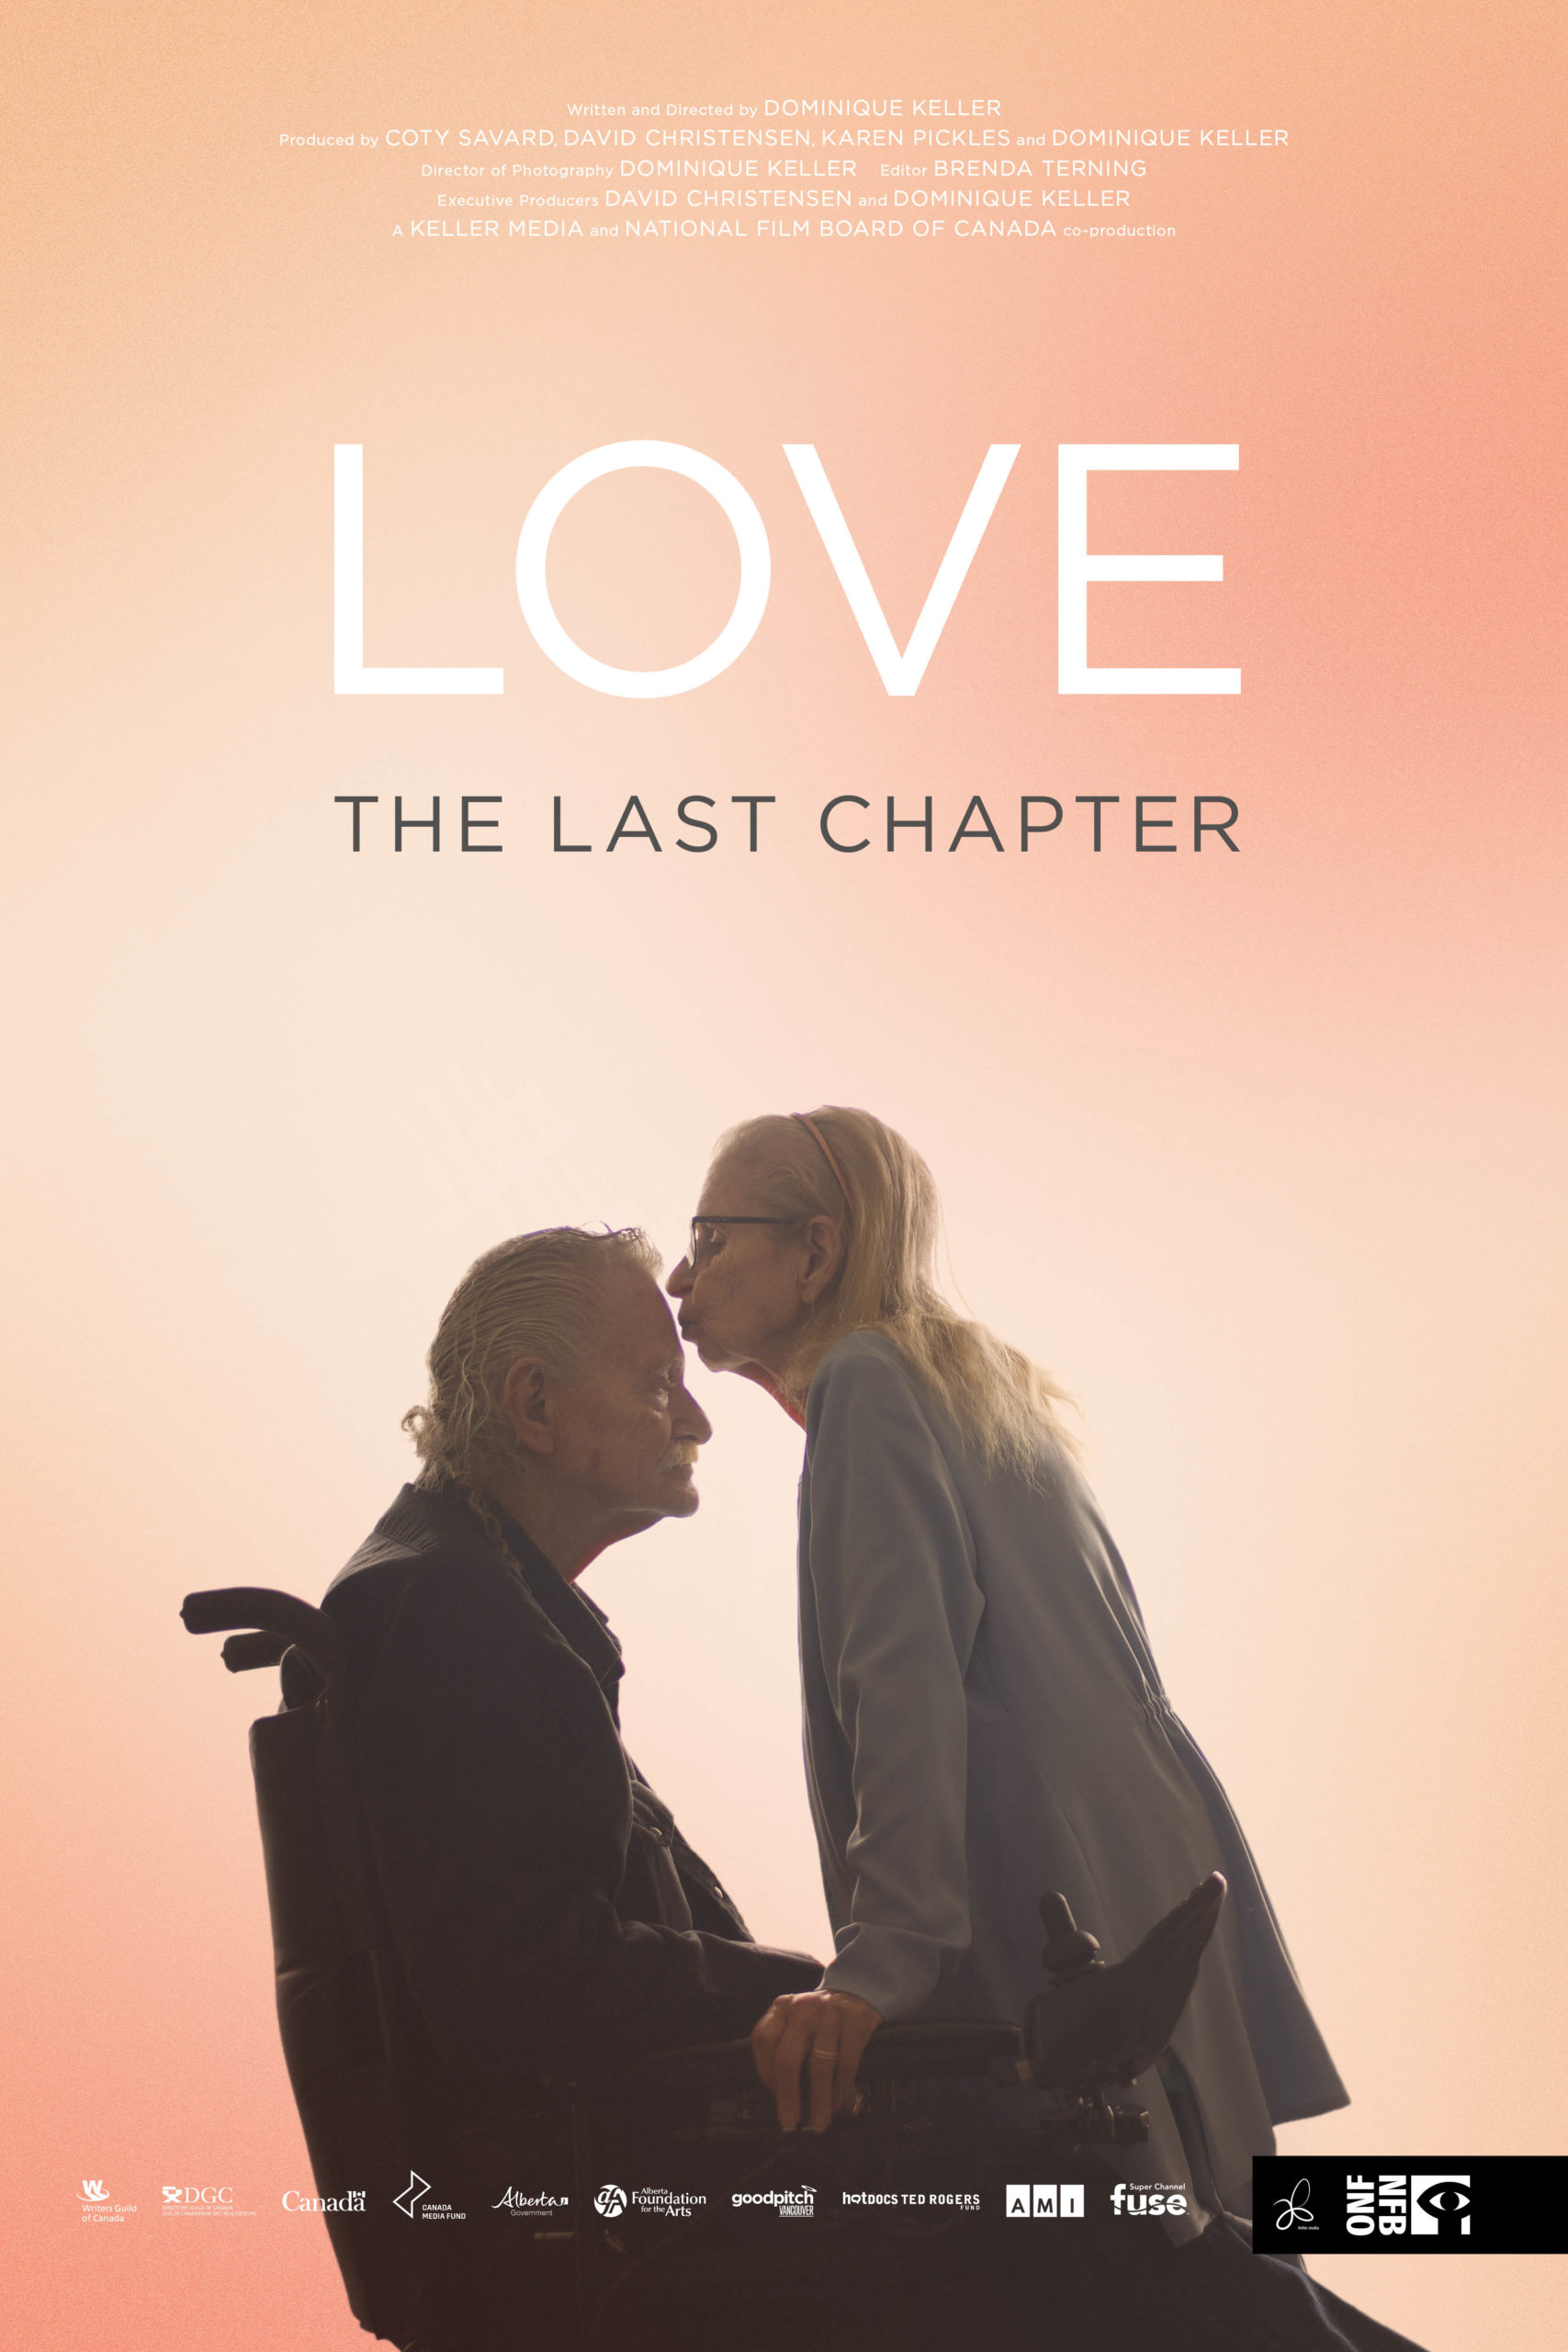 Love The Last Chapter Documentary Dominique Keller NFB Poster